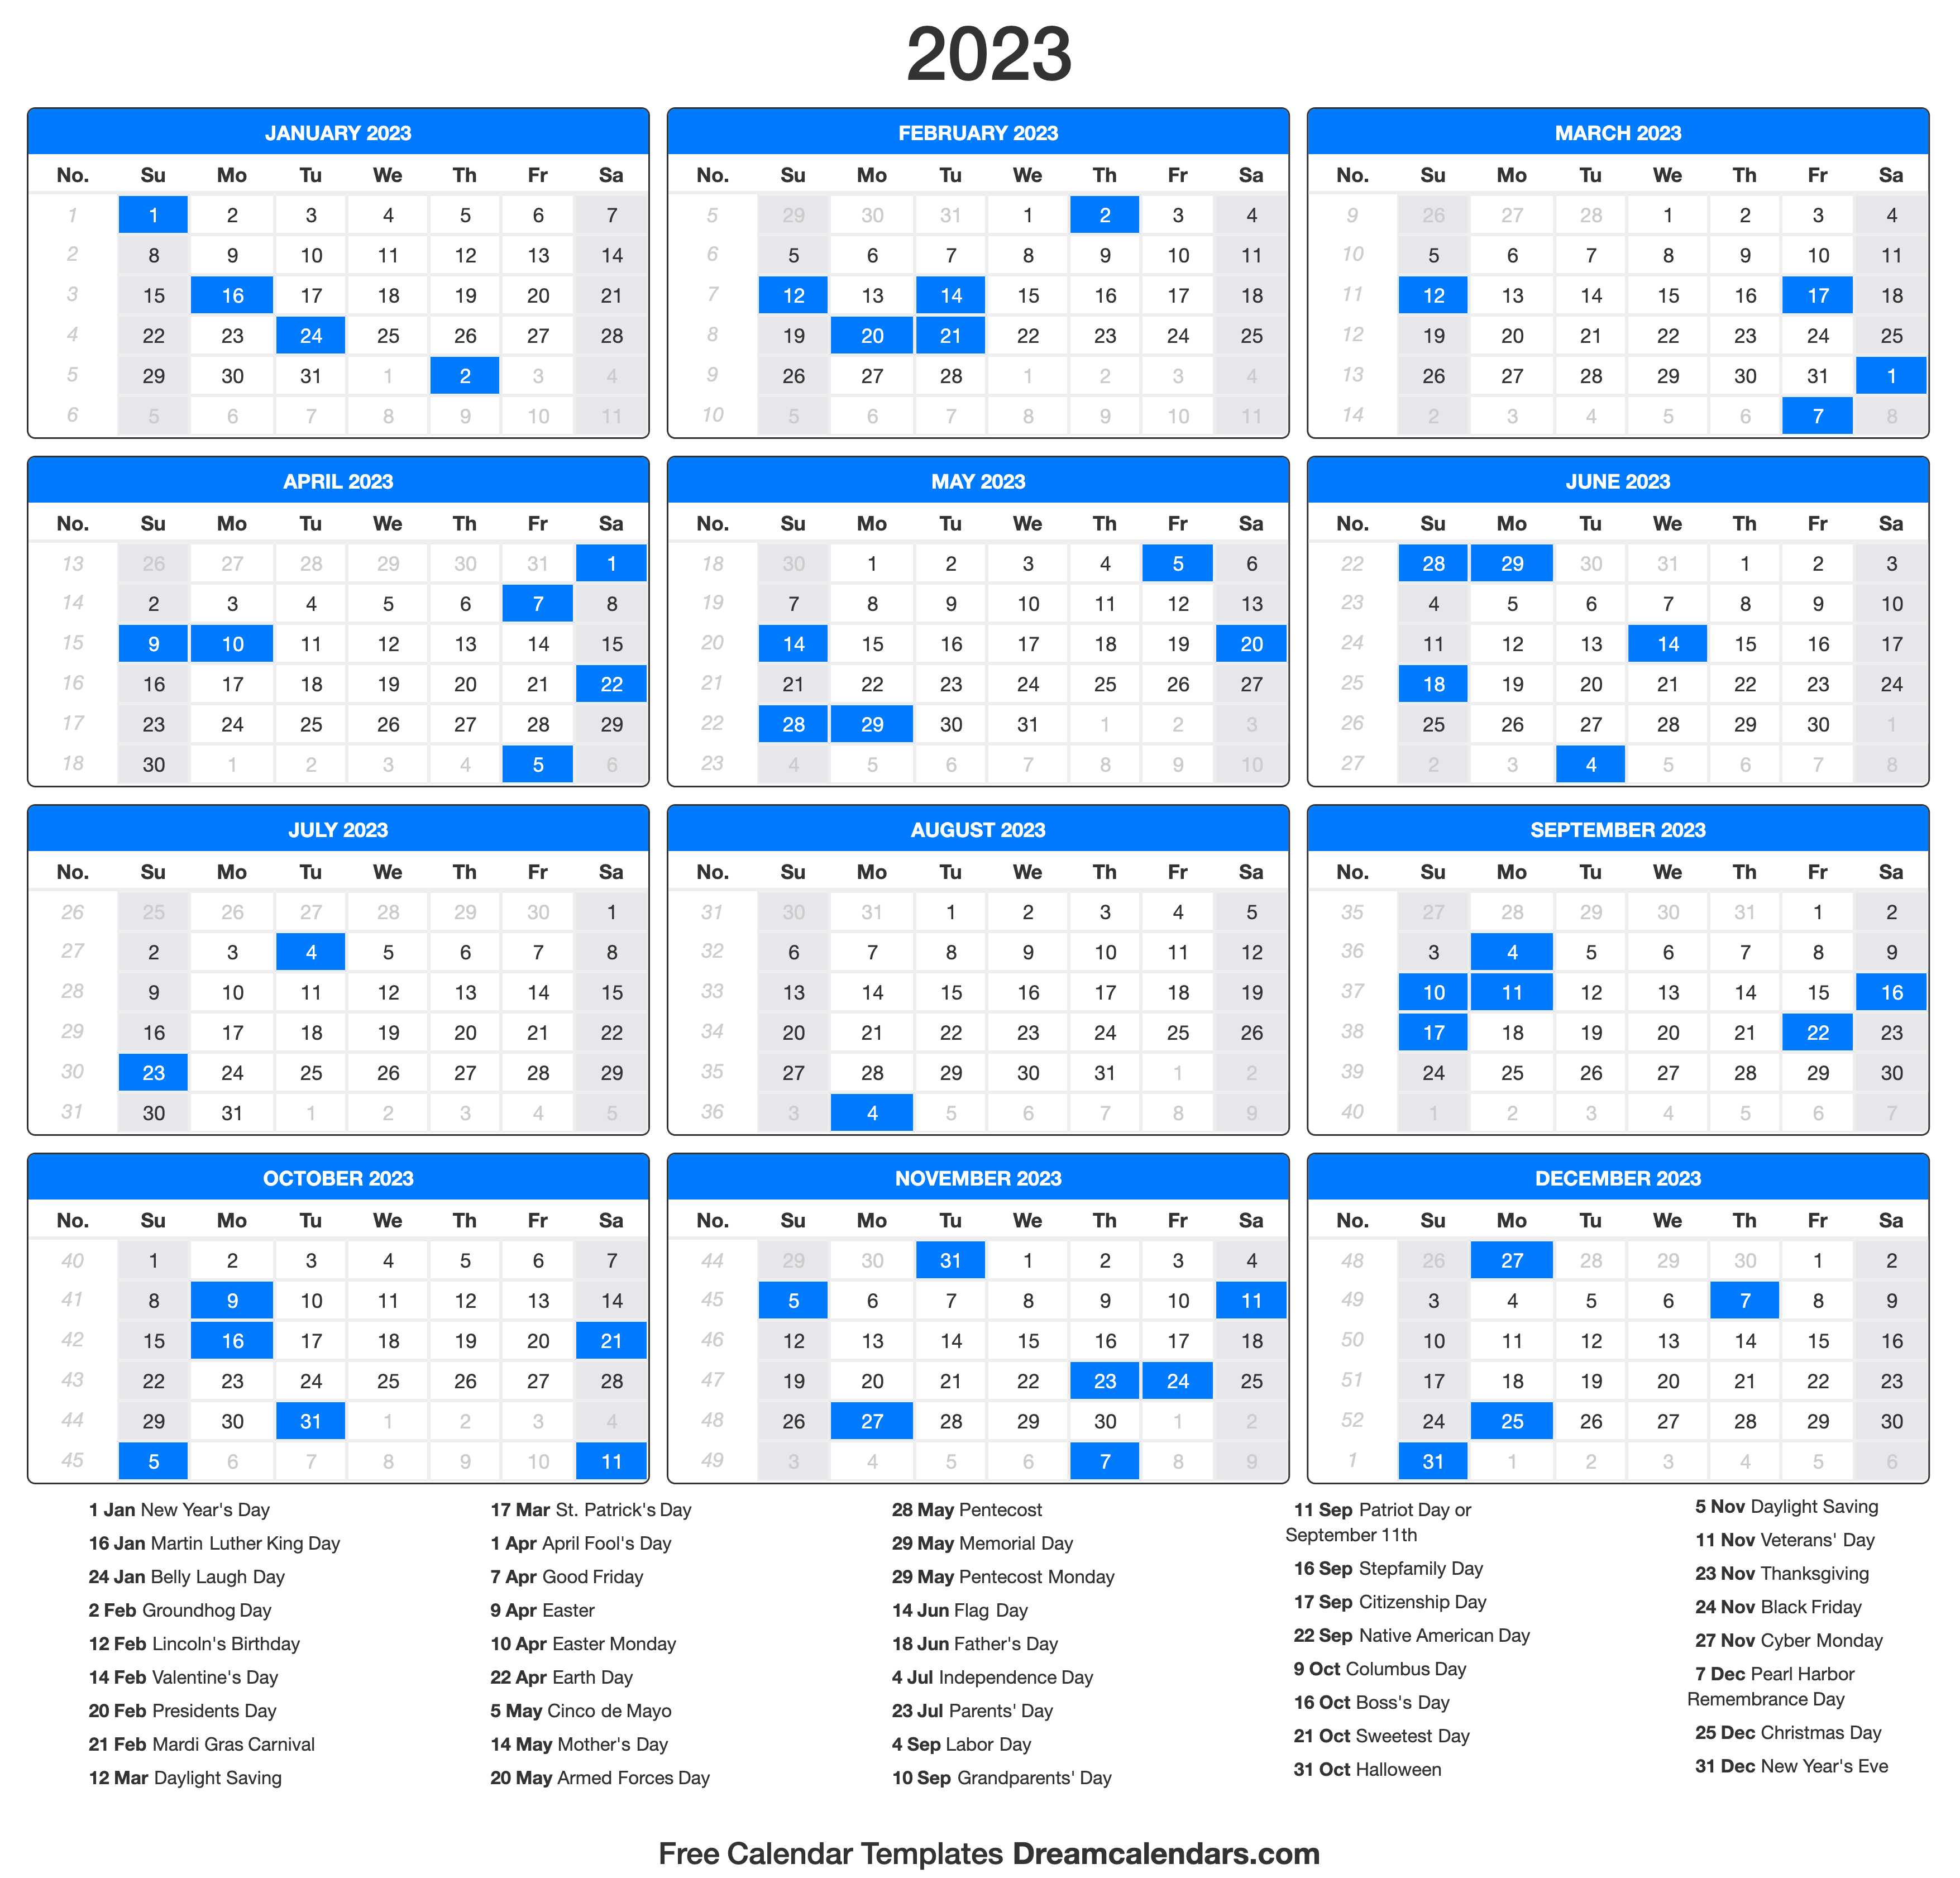 chase dom calendar 2023